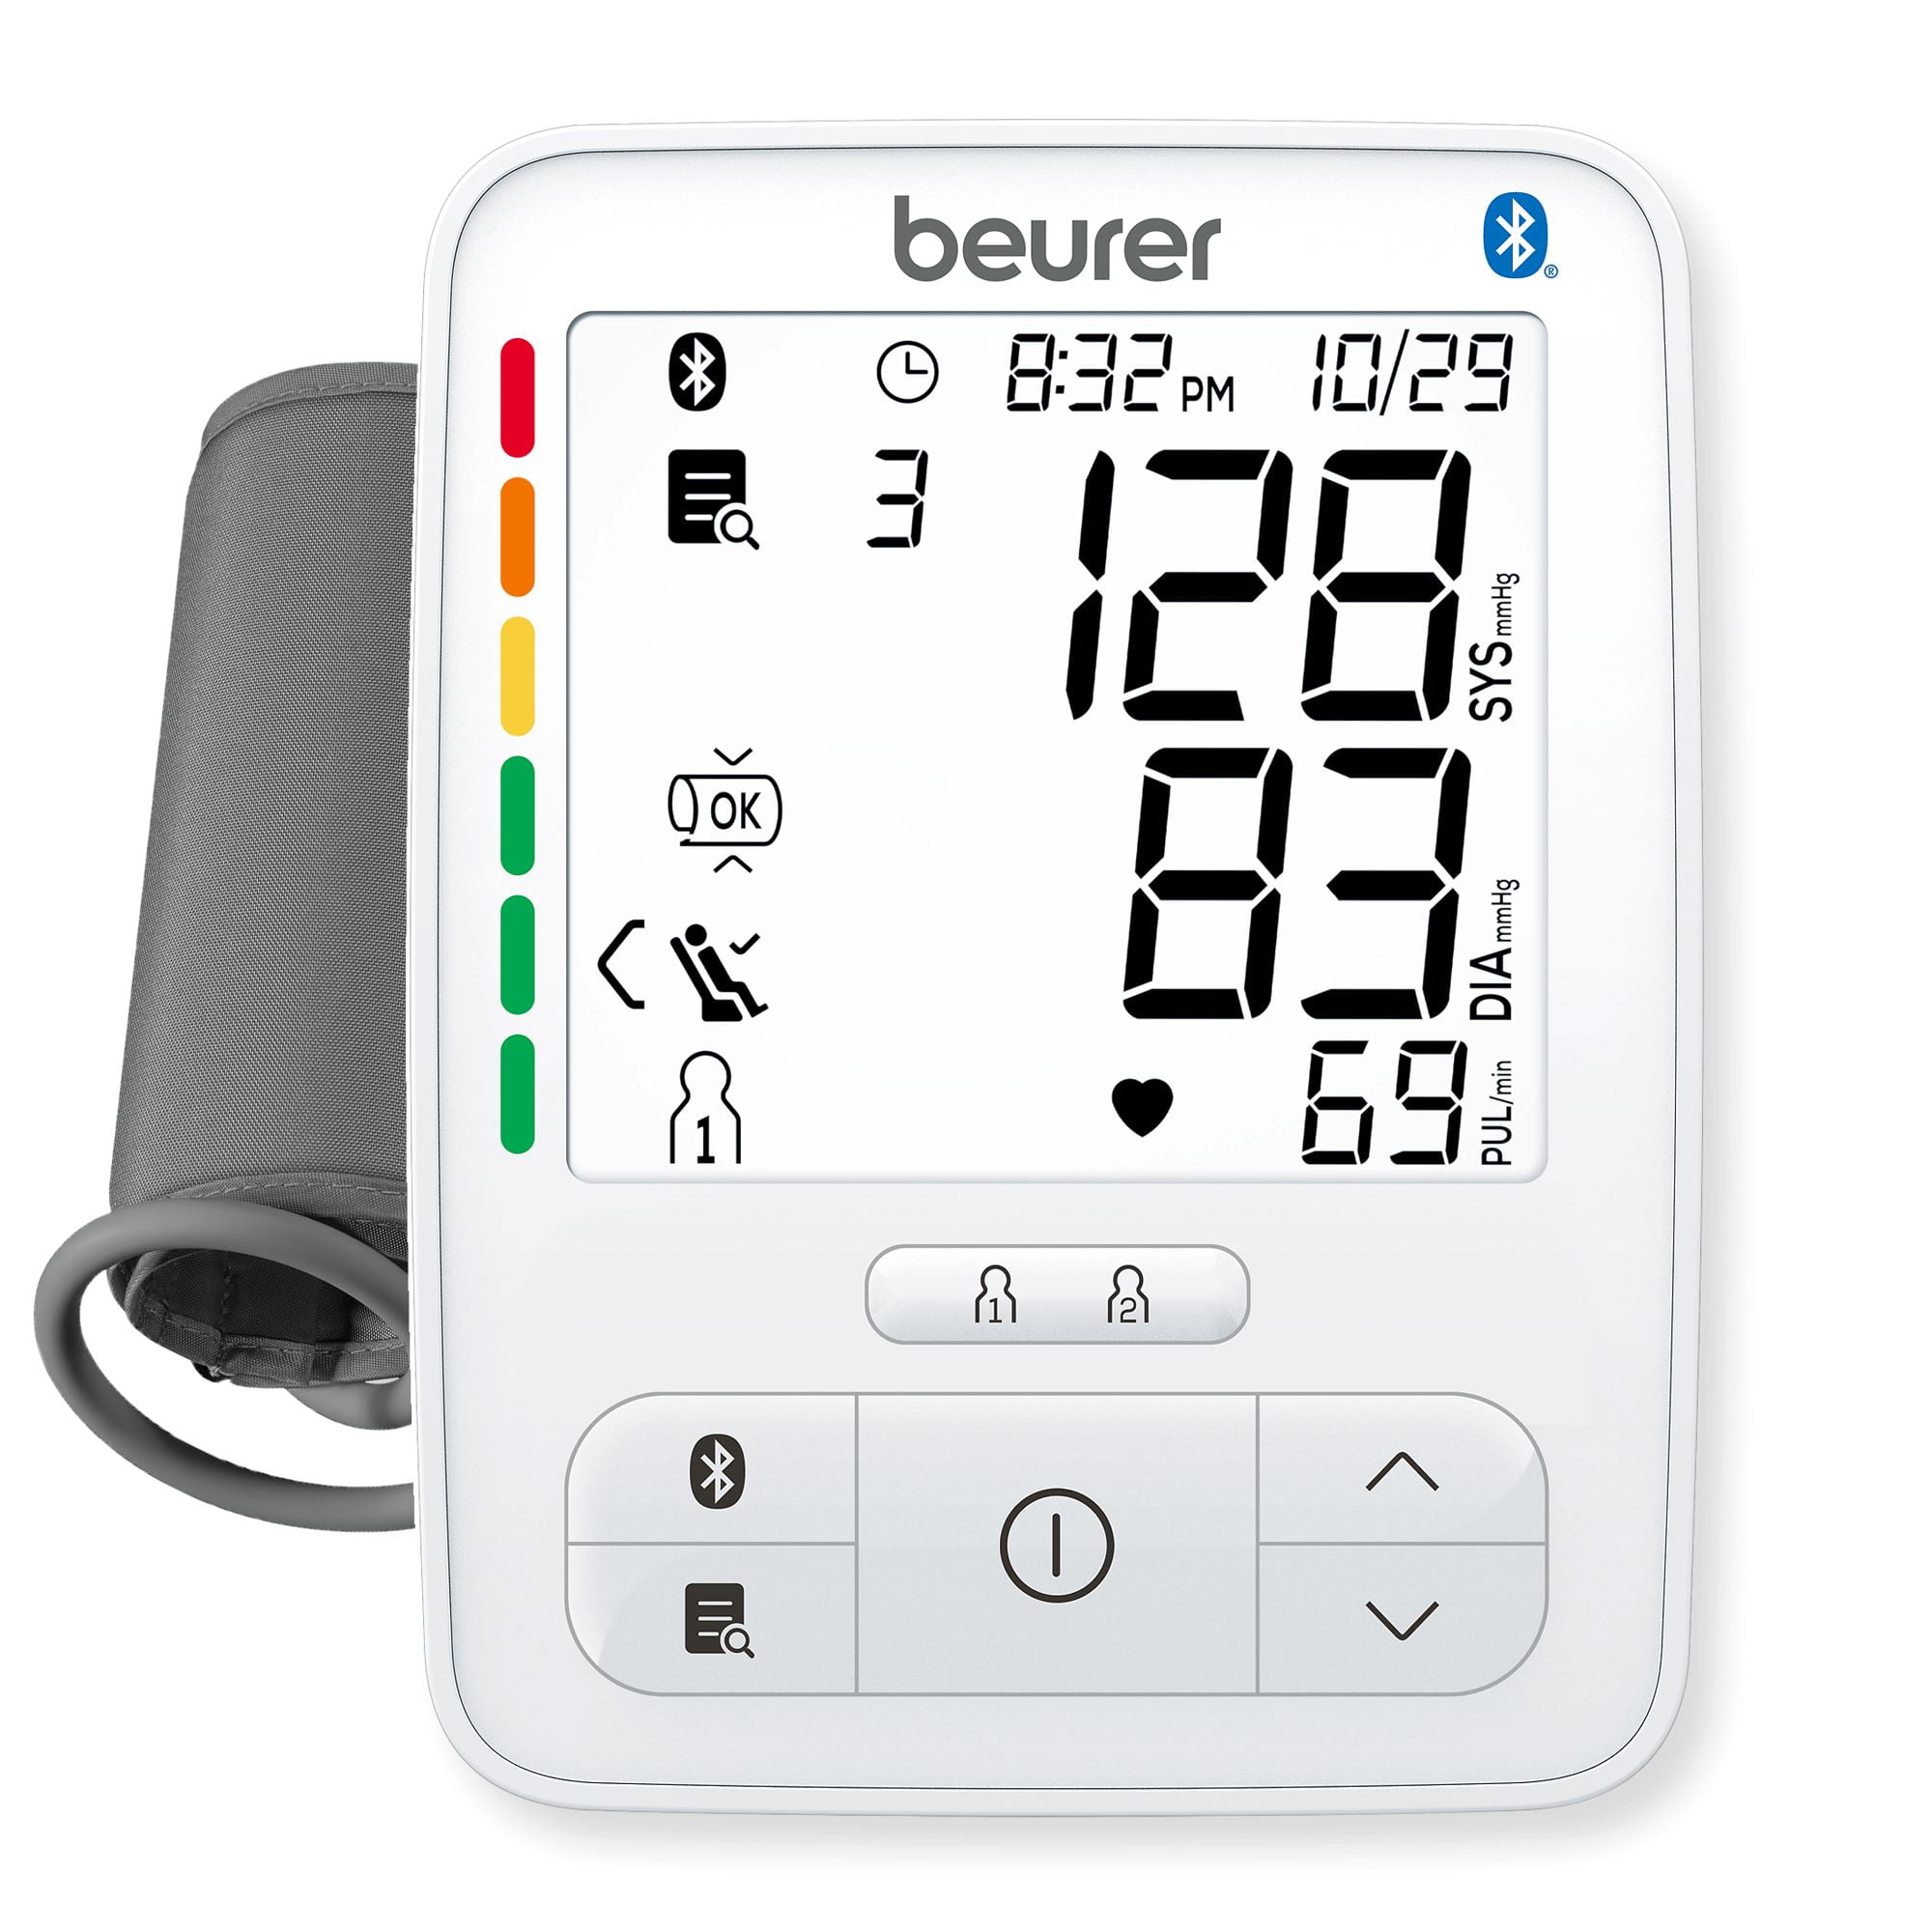 NEW A&D Medical Multi-User Blood Pressure Monitor UA-767F 8.6- 16.5 /  22-45 cm